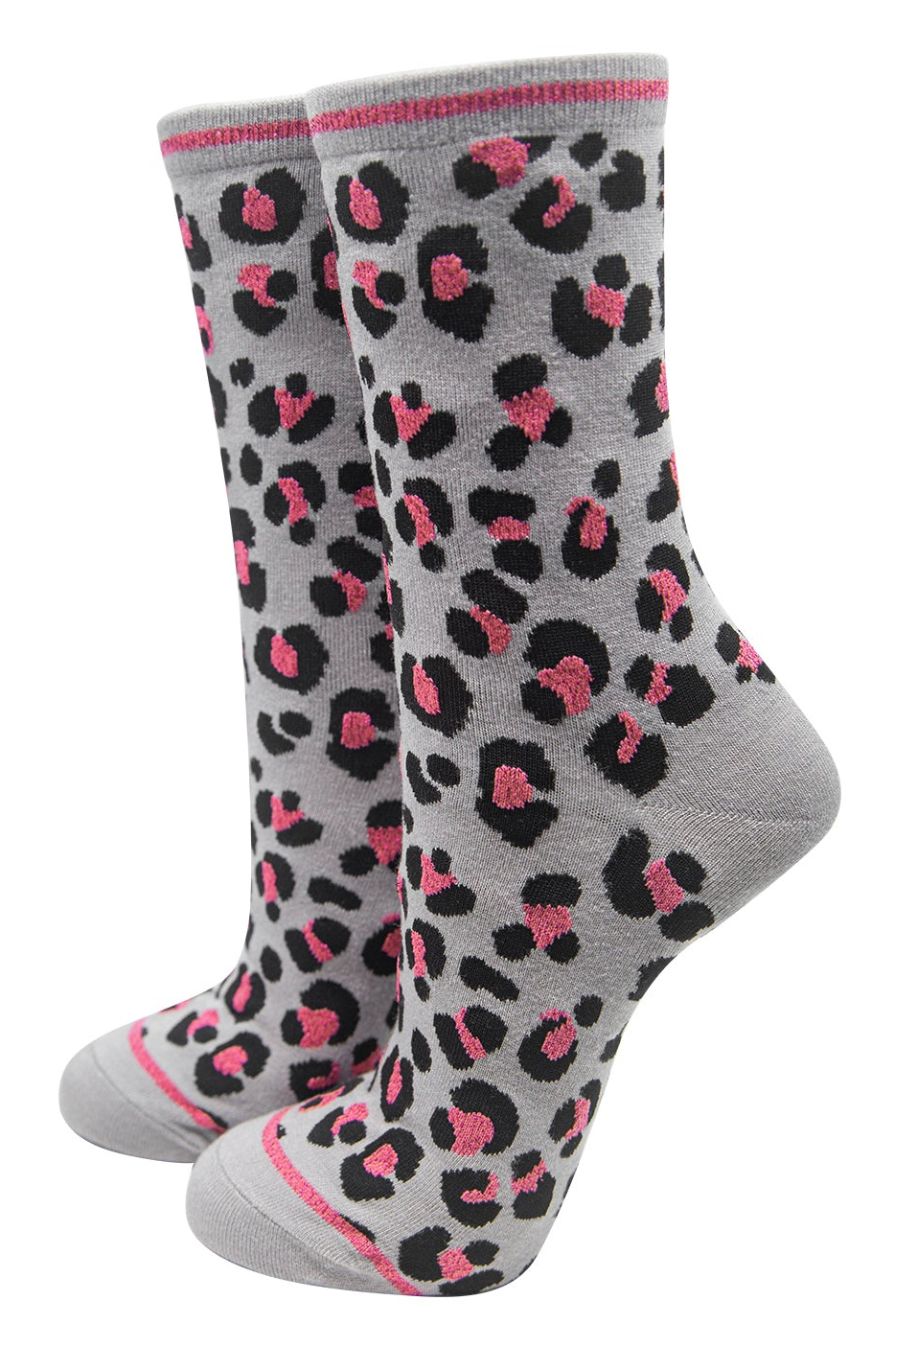 Sock Talk UK Bamboo Socks Women's Ankle Socks Leopard Print Grey